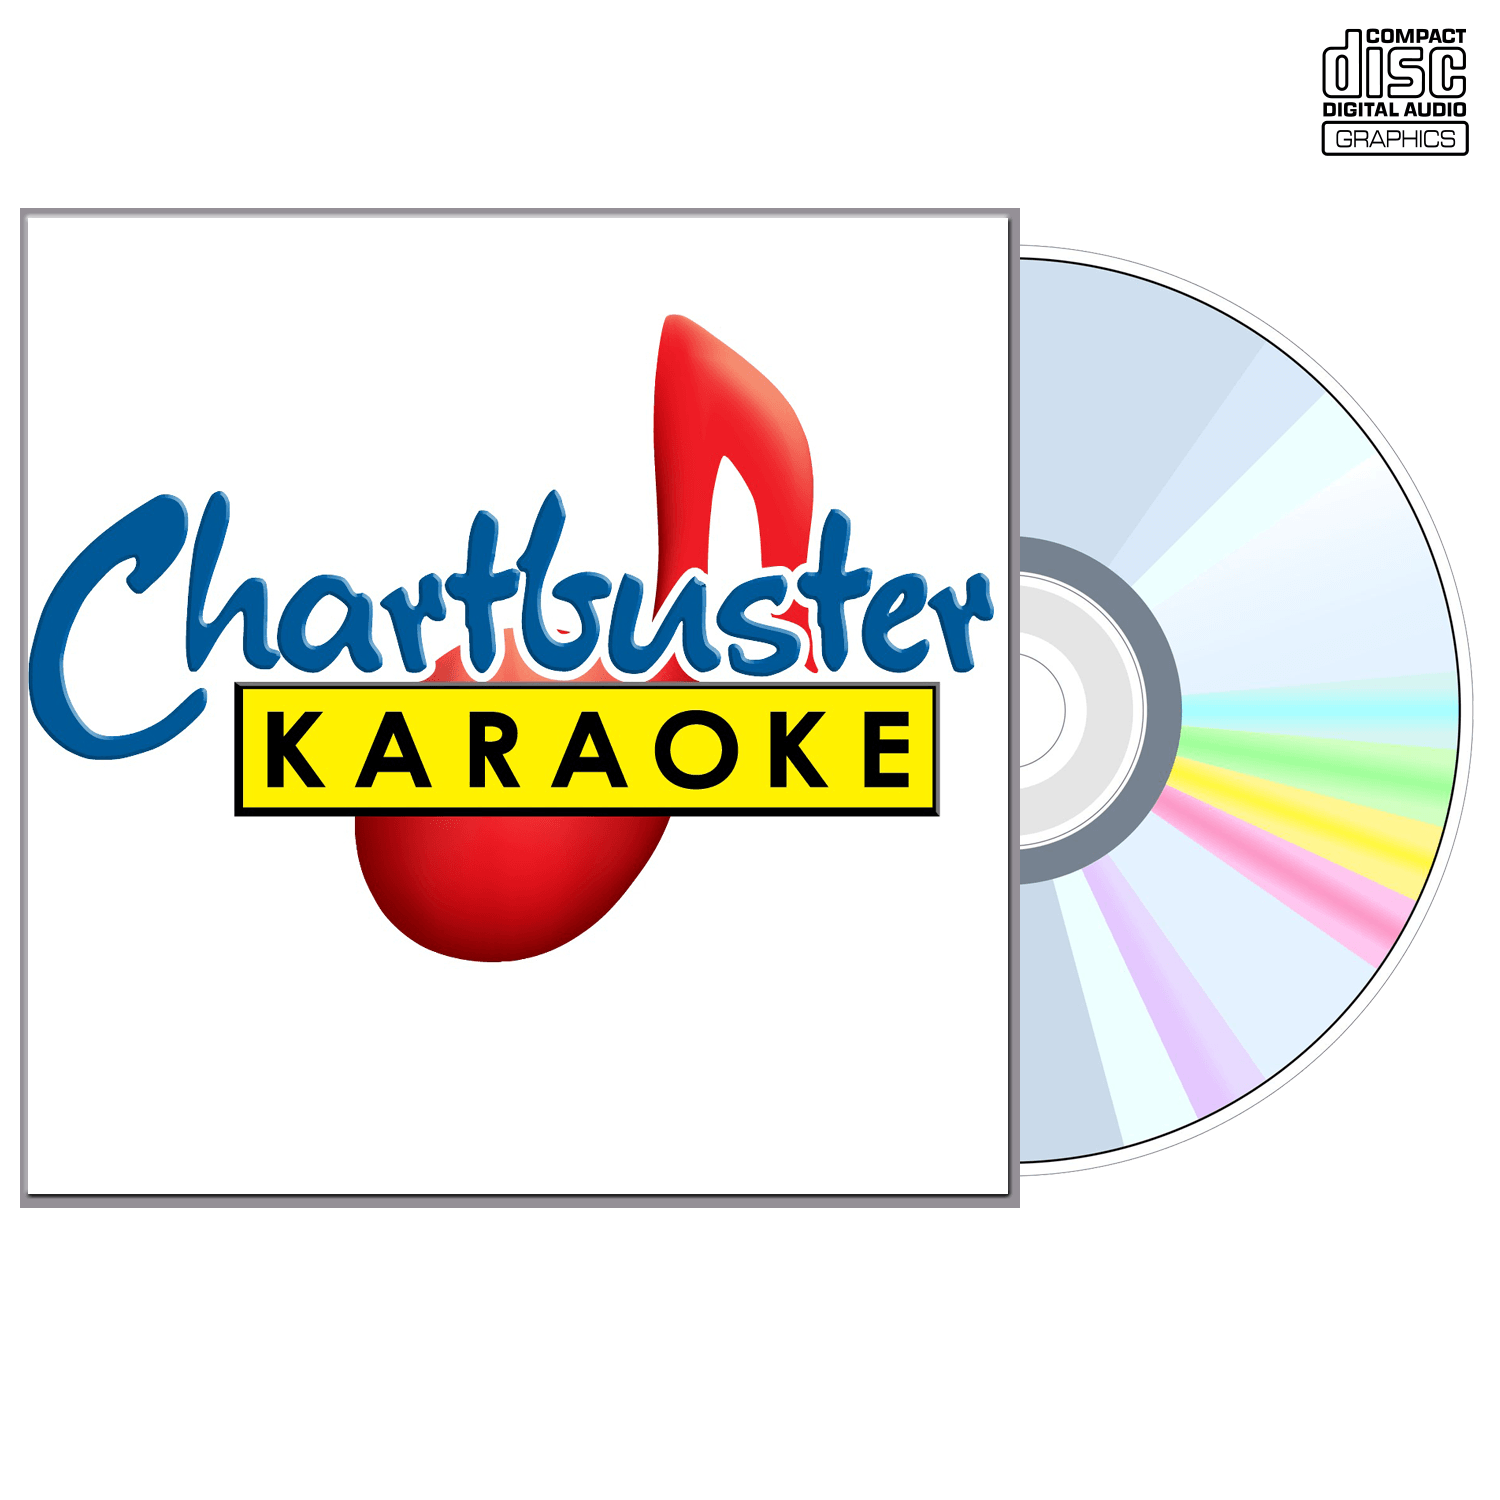 Country Mix Vol 19 - CD+G - Chartbuster Karaoke - Karaoke Home Entertainment